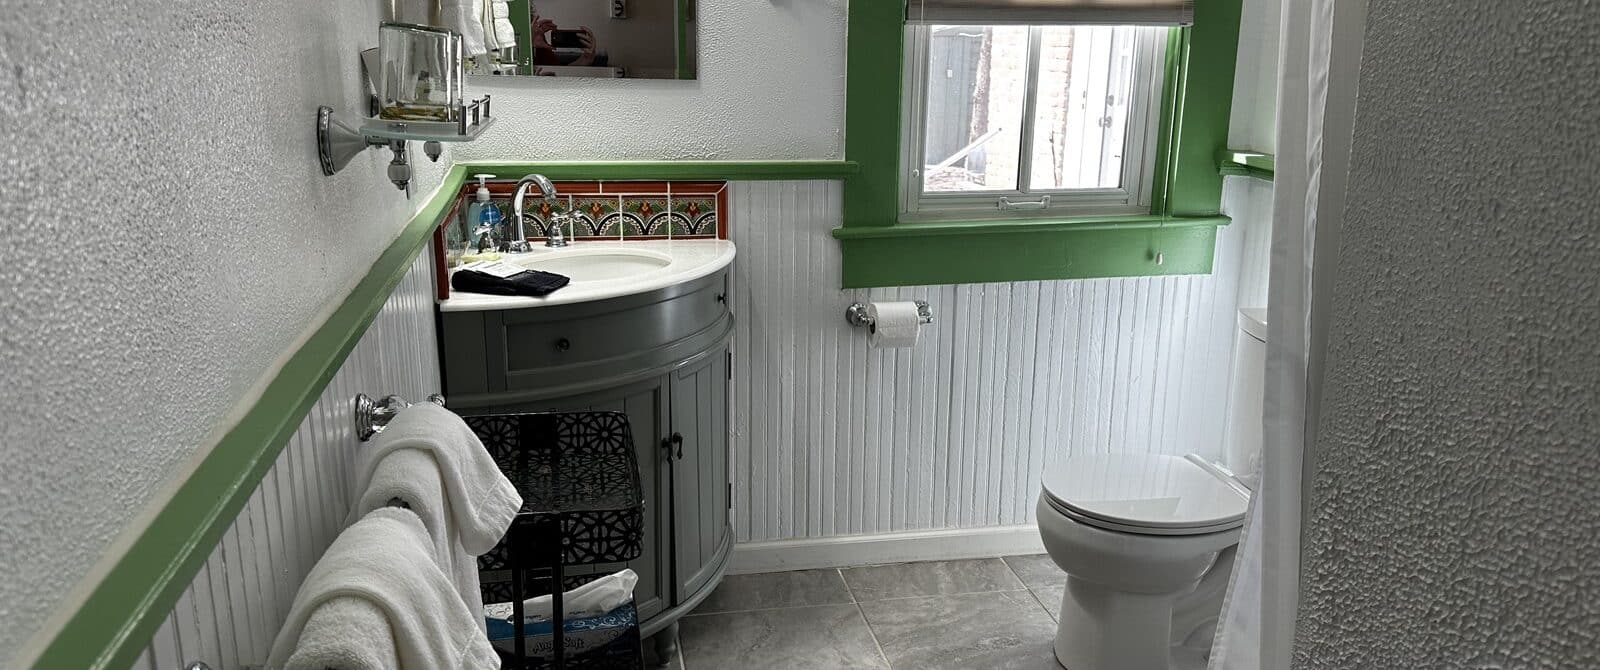 Bathroom with corner vanity, towel racks, window with natural light, toilet